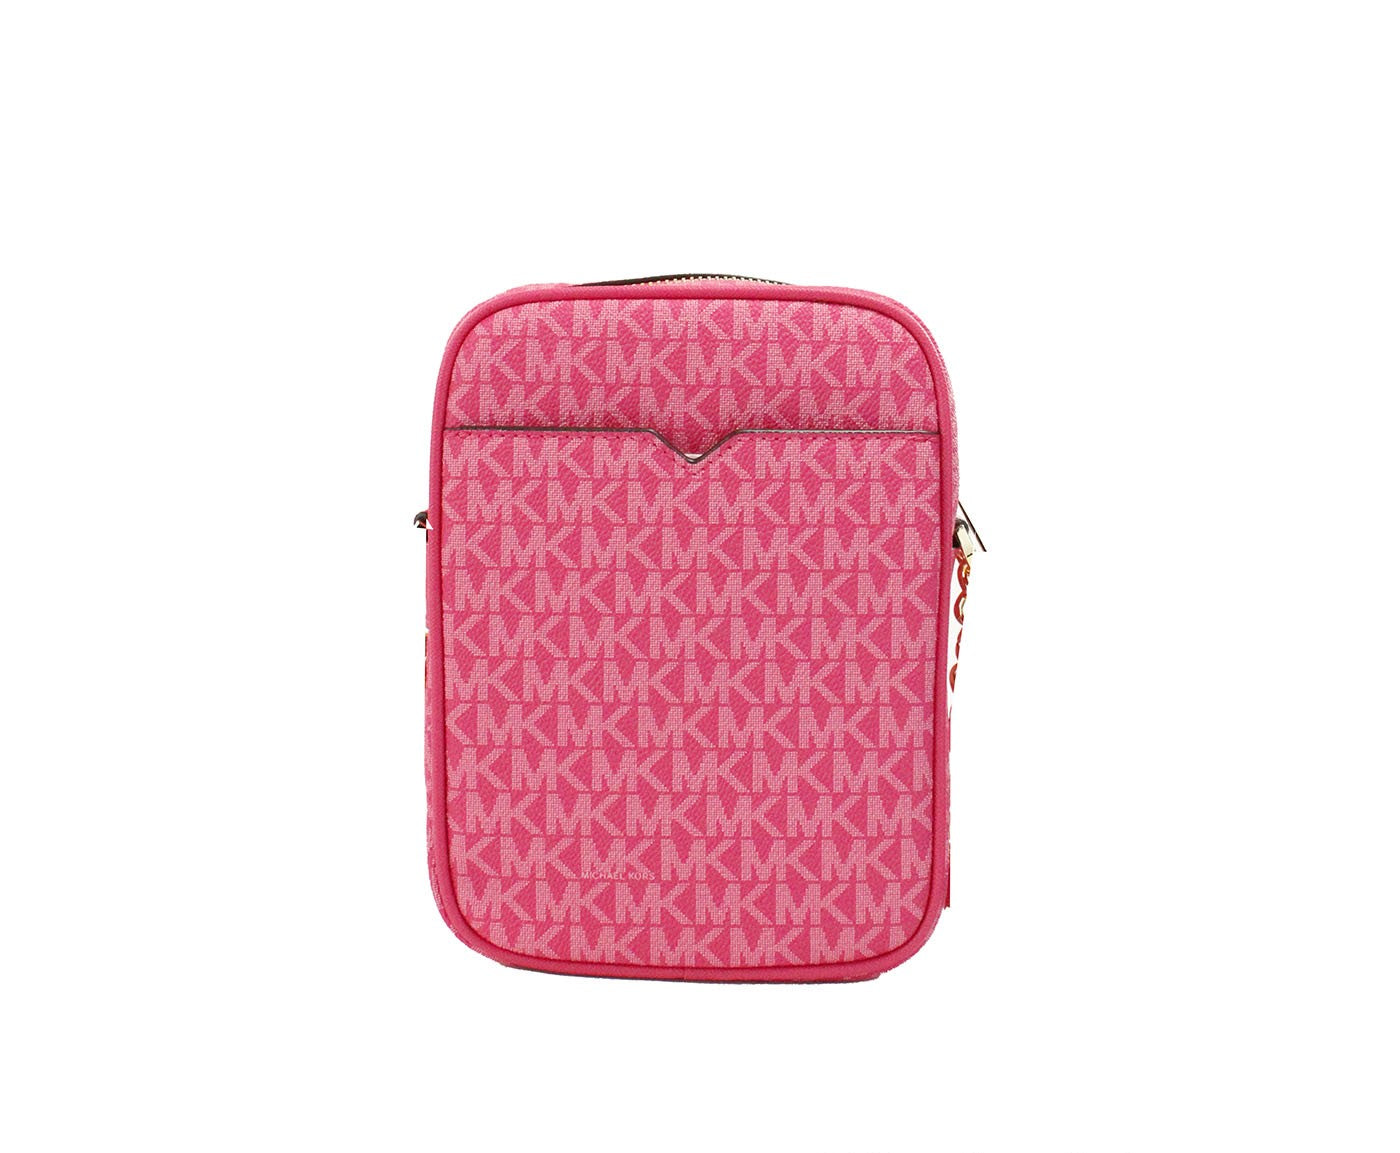 Michael Kors Electric Pink PVC Flight Leather North South Chain Crossbody Bag